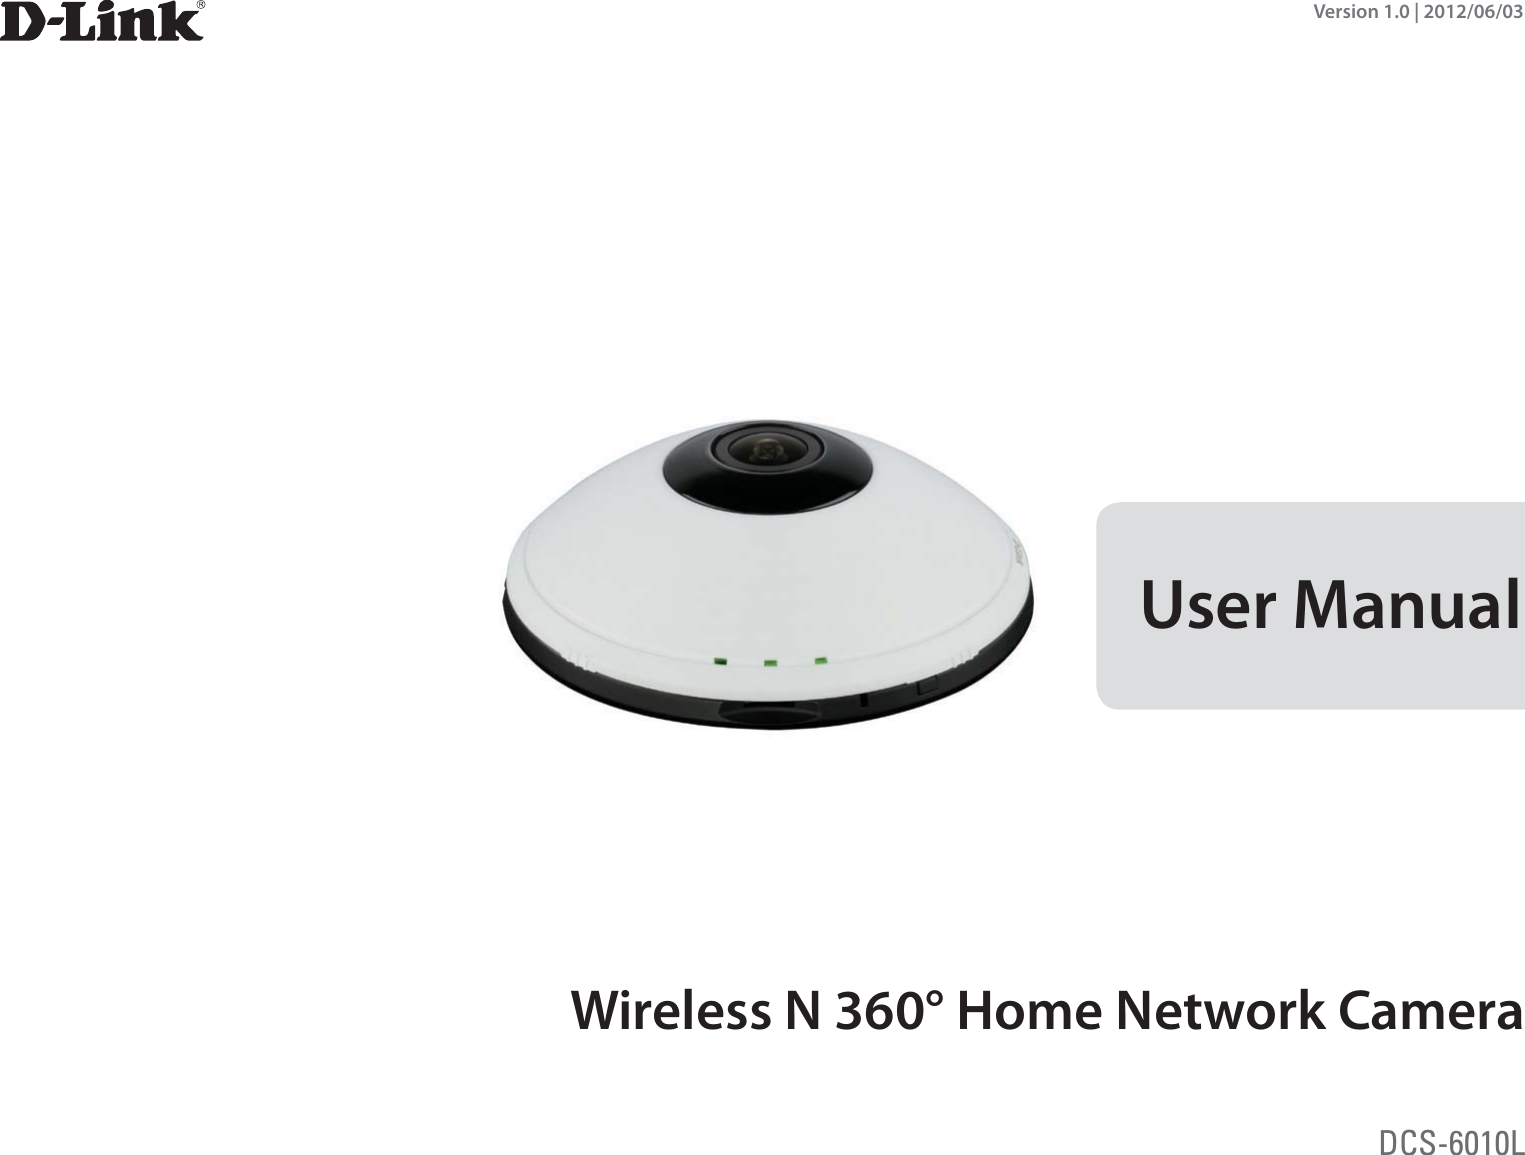 User ManualWireless N 360° Home Network CameraDCS-6010LVersion 1.0 | 2012/06/03